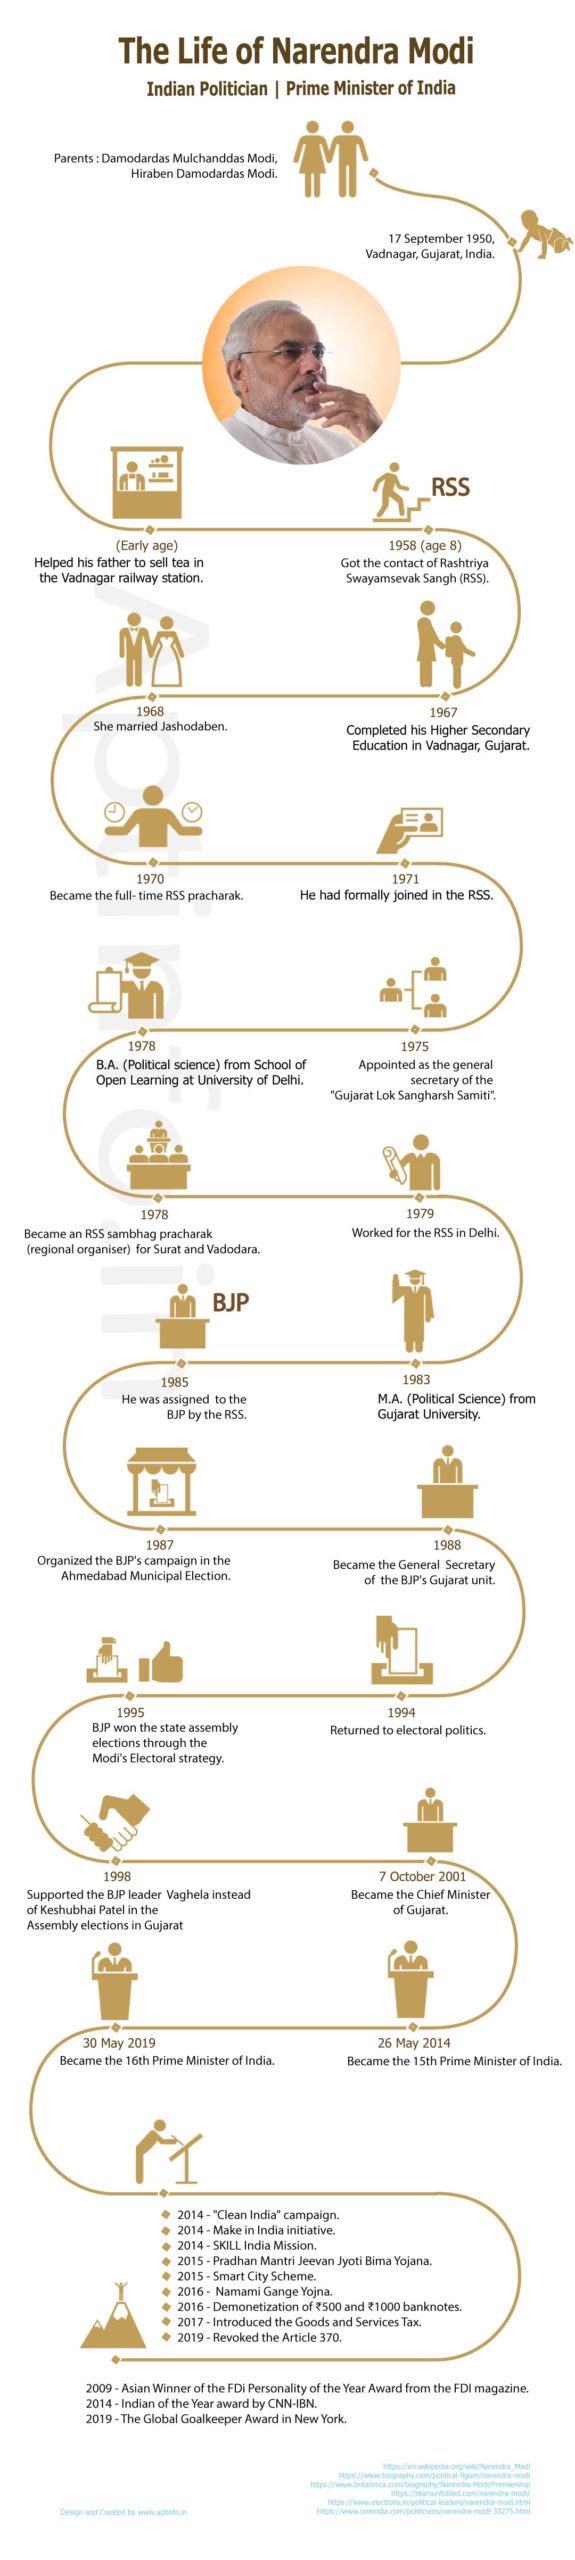 Profile-and-Life-History-of-Narendra-Modi